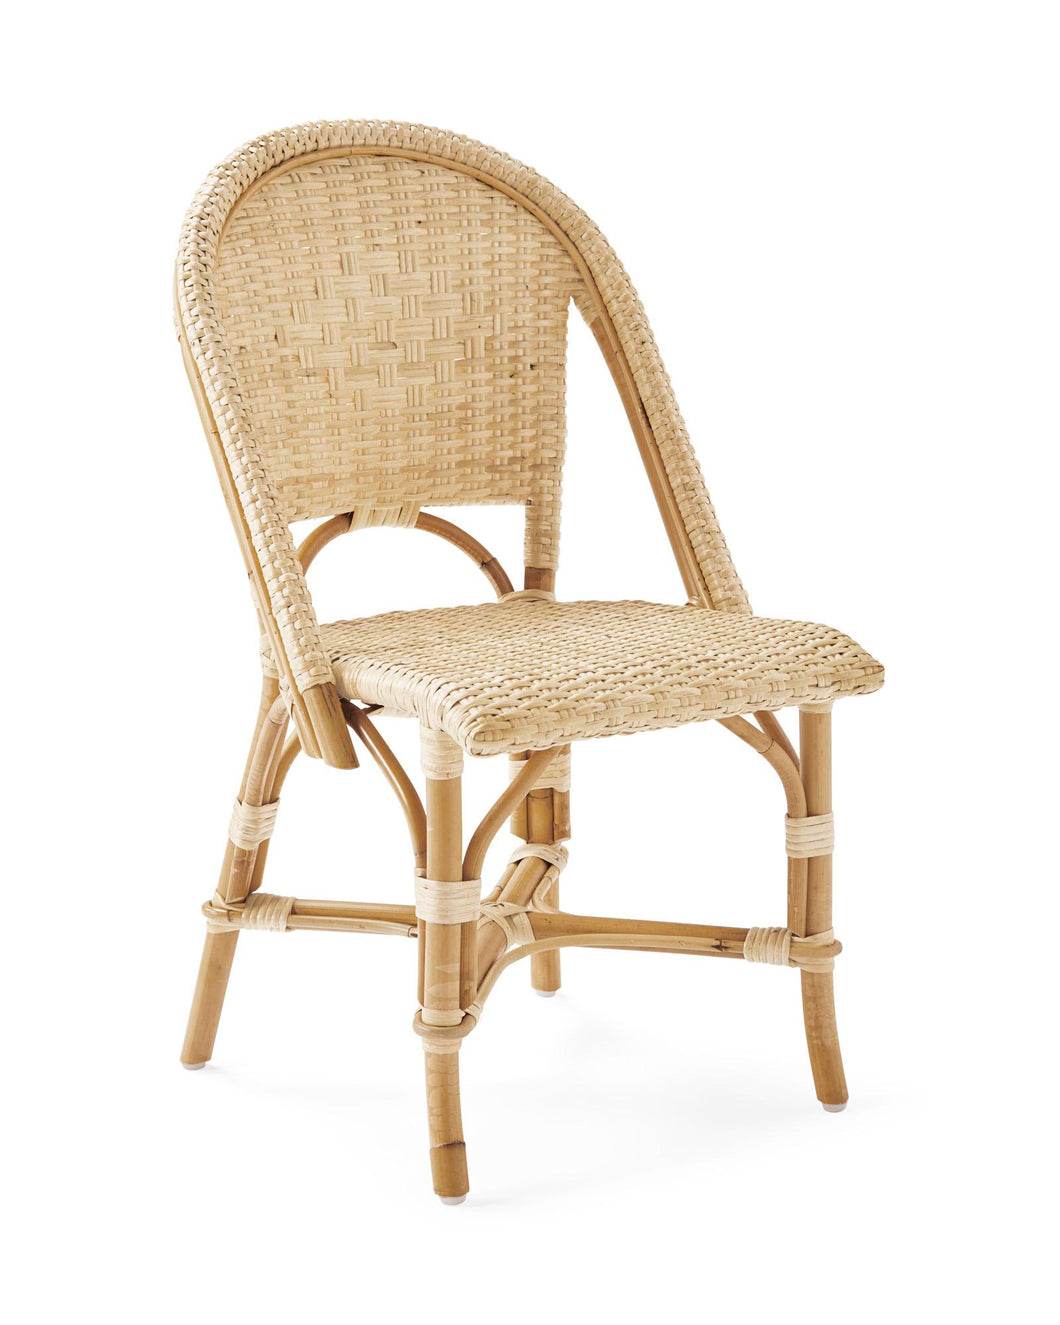 12 Bahia Chair (Coming March 30th